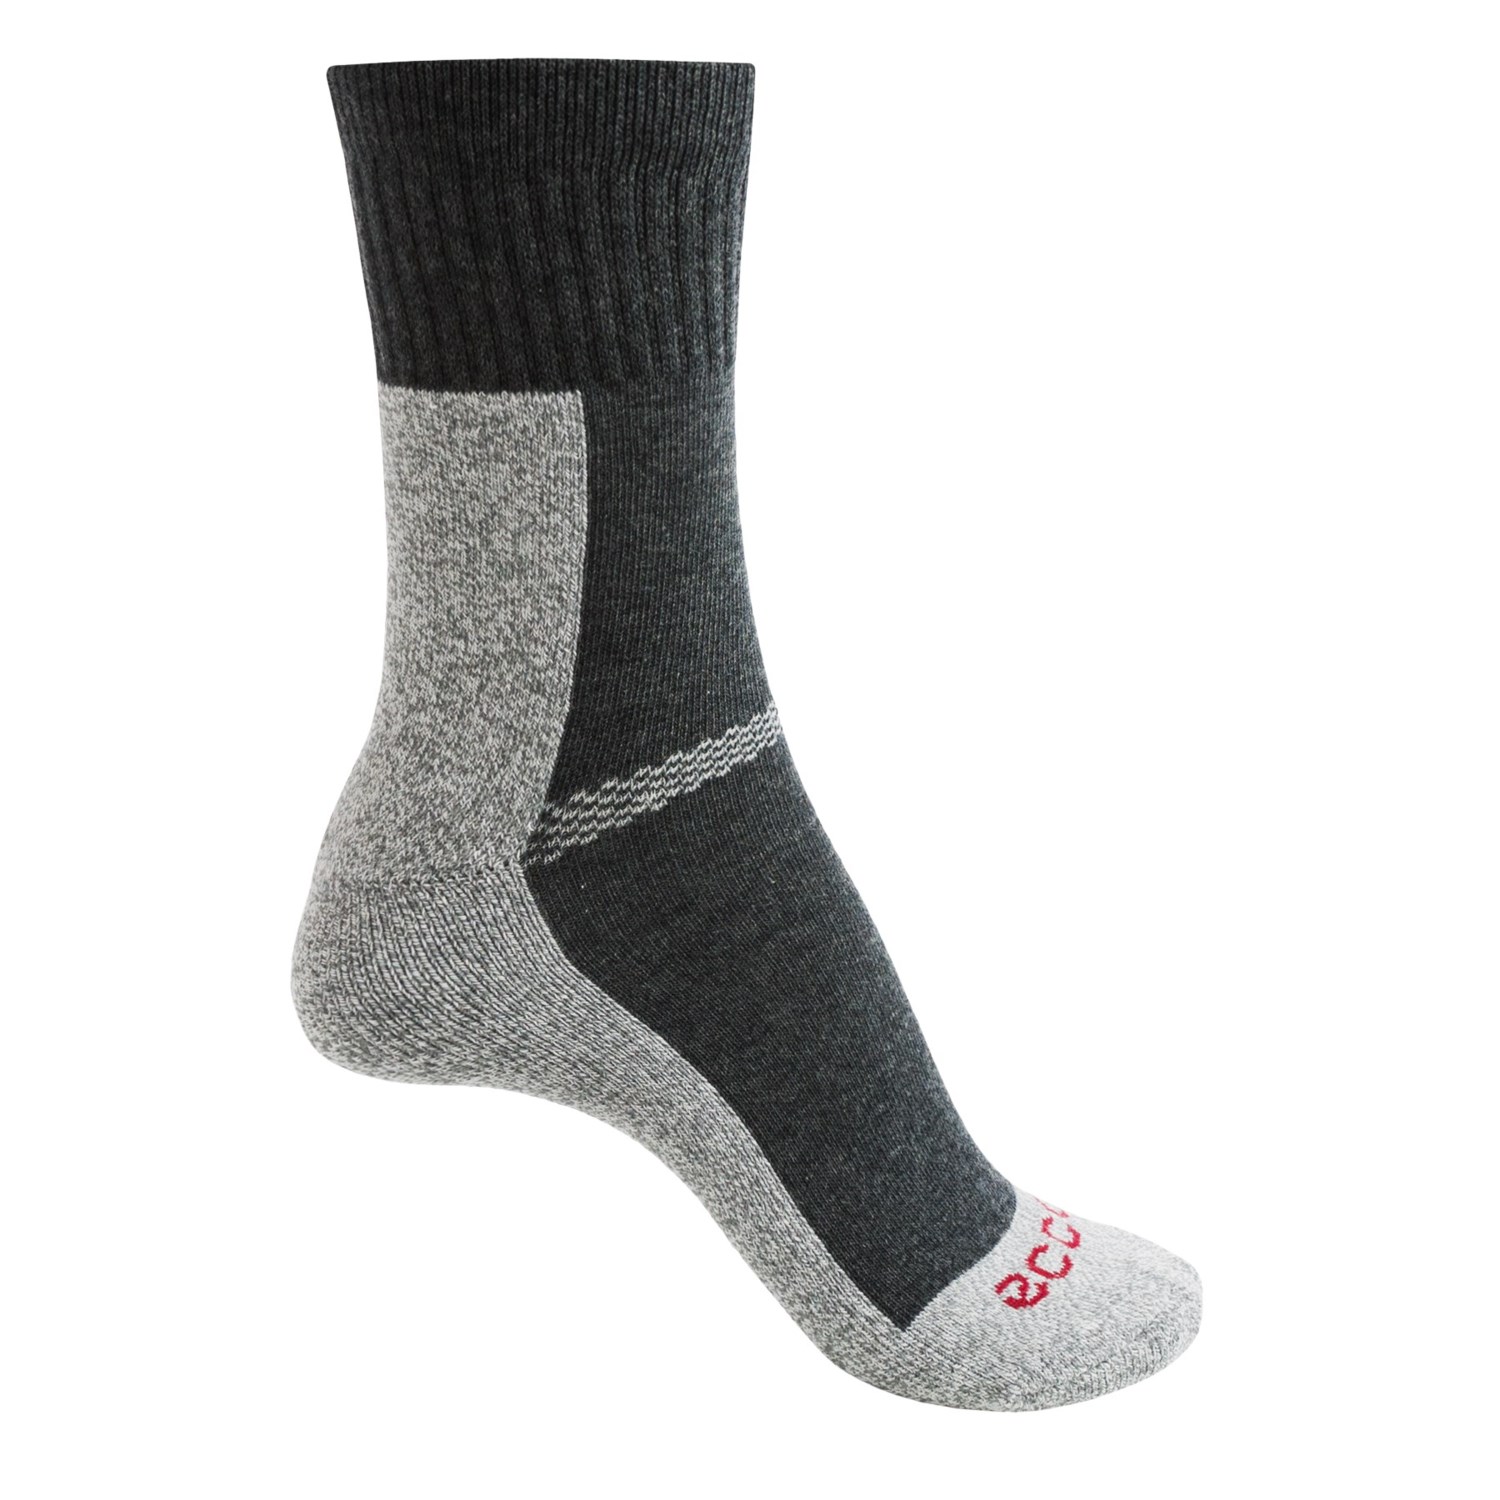 ECCO CoolMax® Sport Socks (For Women) - Save 16%